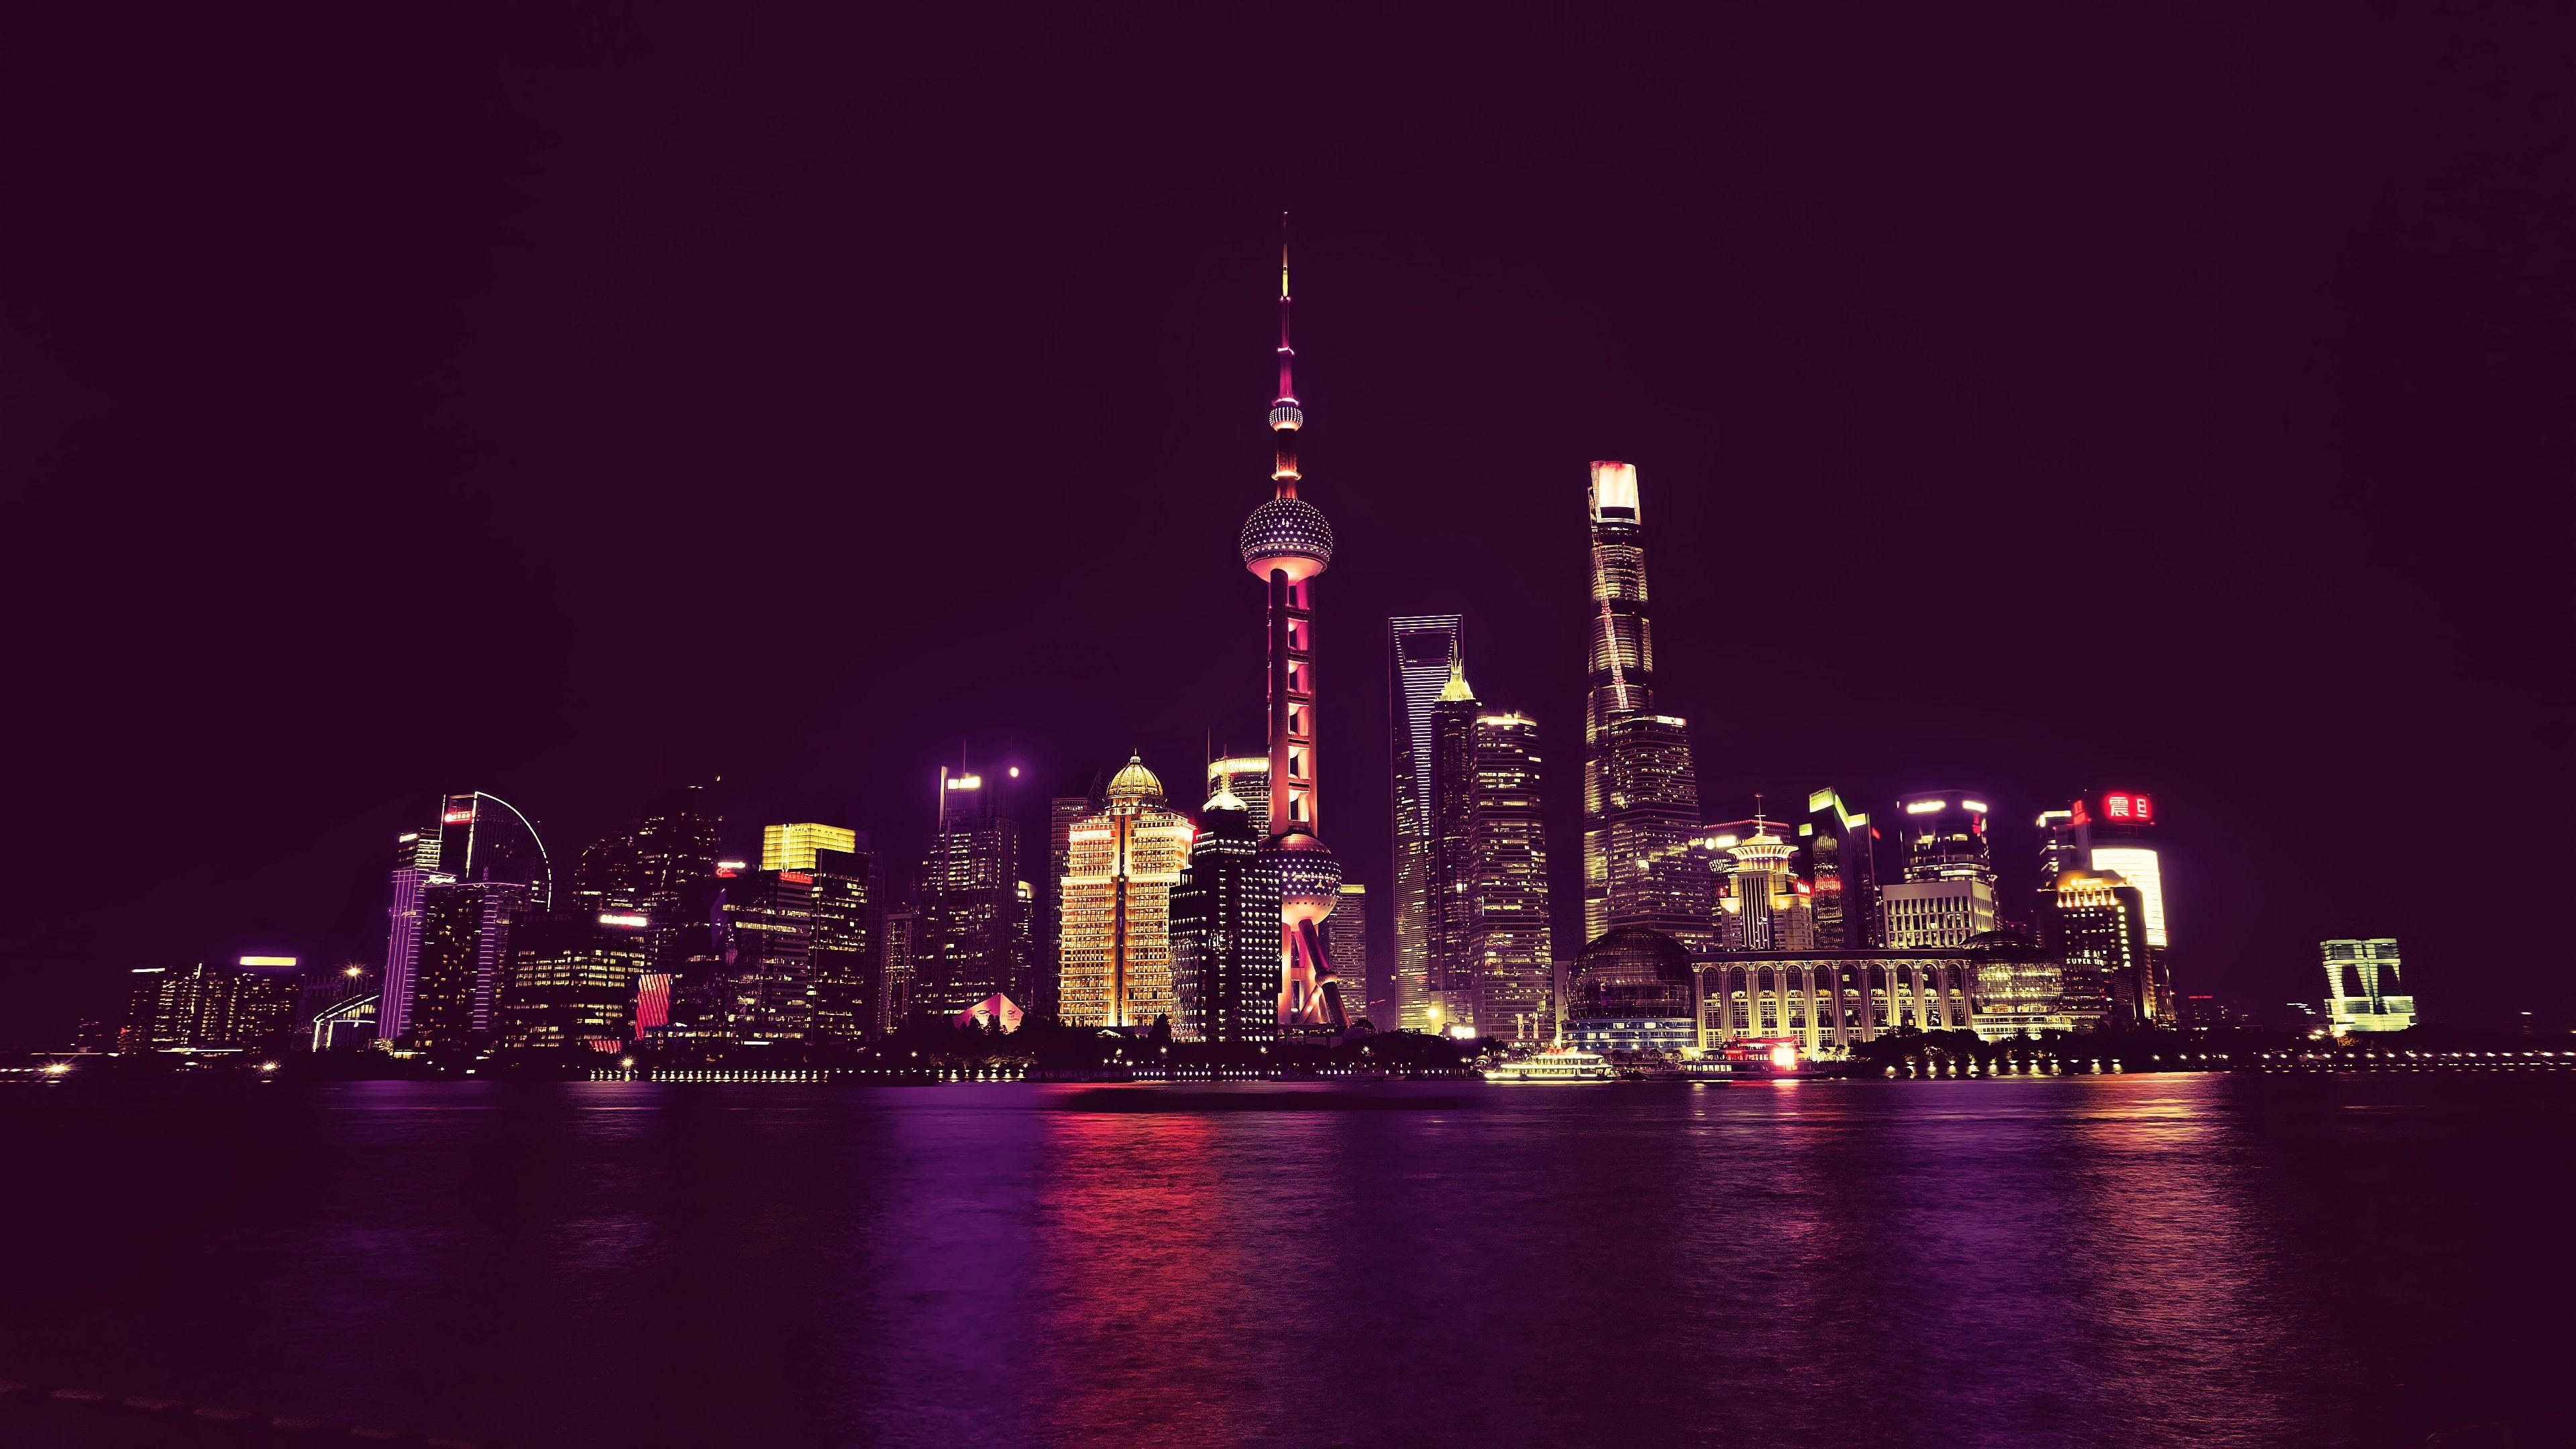 China Neon City Lights 4k Ultra HD Wallpaper. Background Image